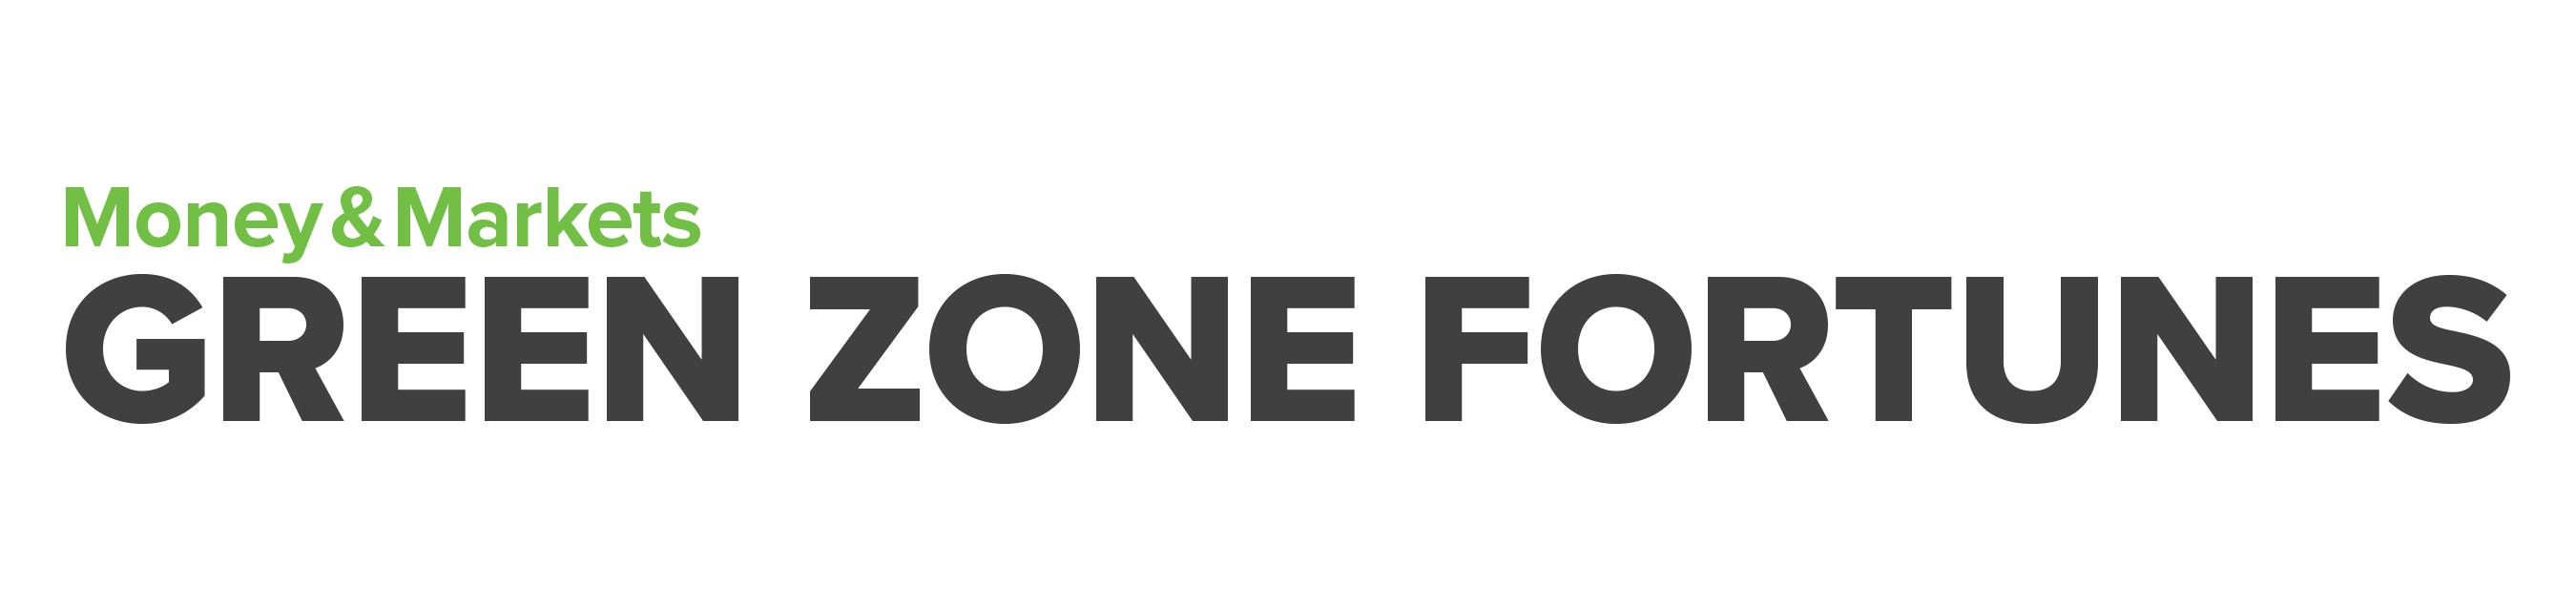 Green Zone Fortunes logo